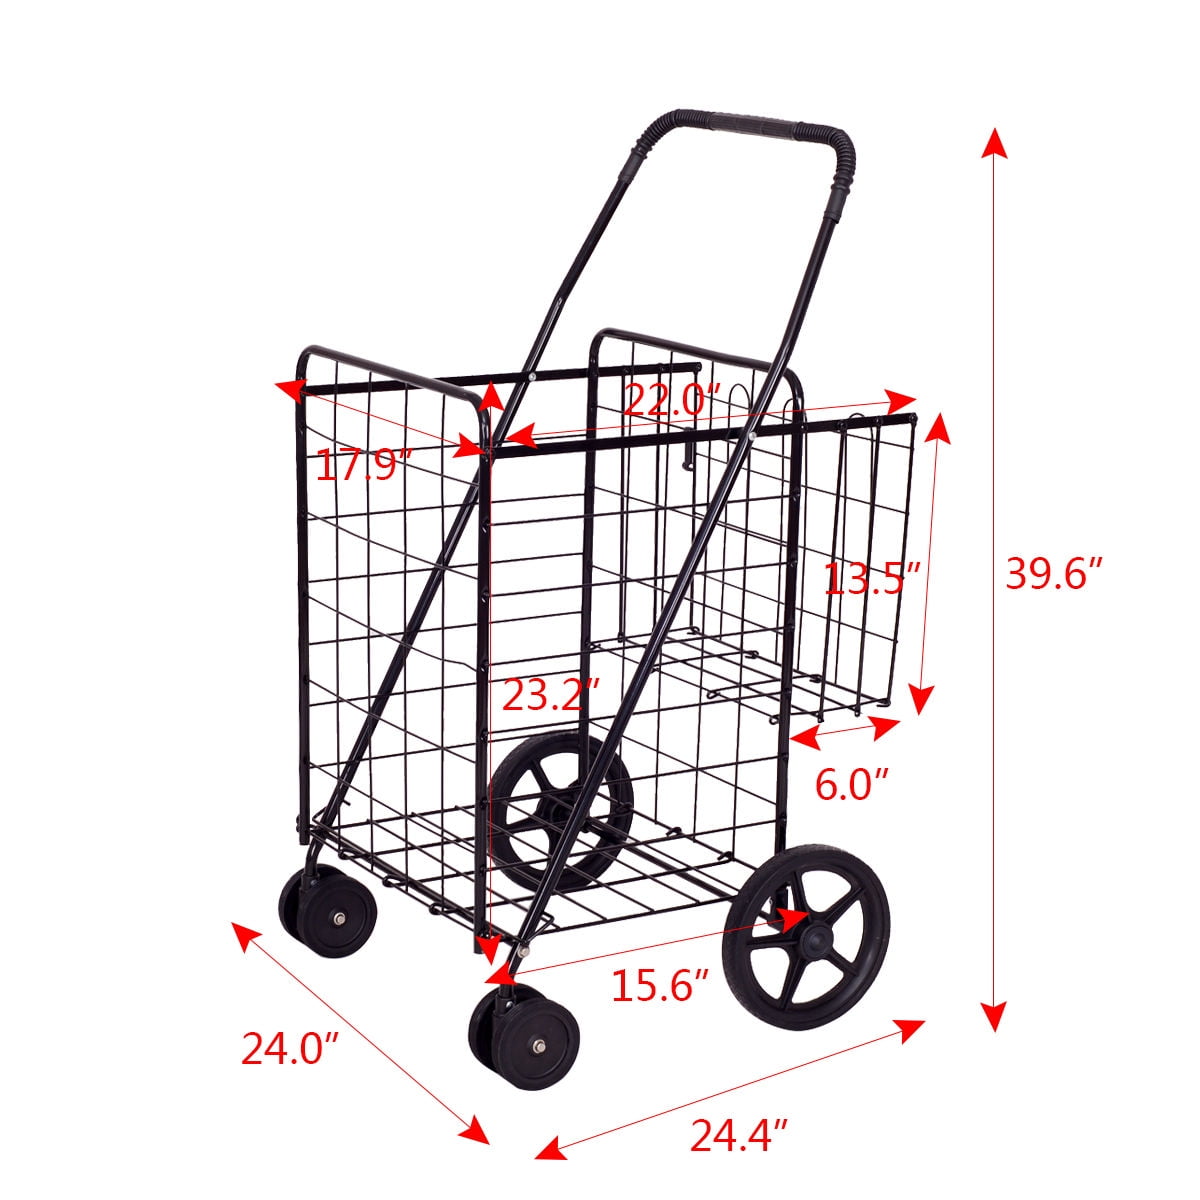 Folding Shopping Cart Jumbo Basket Grocery Laundry Travel w/ 8 Stair Wheels m